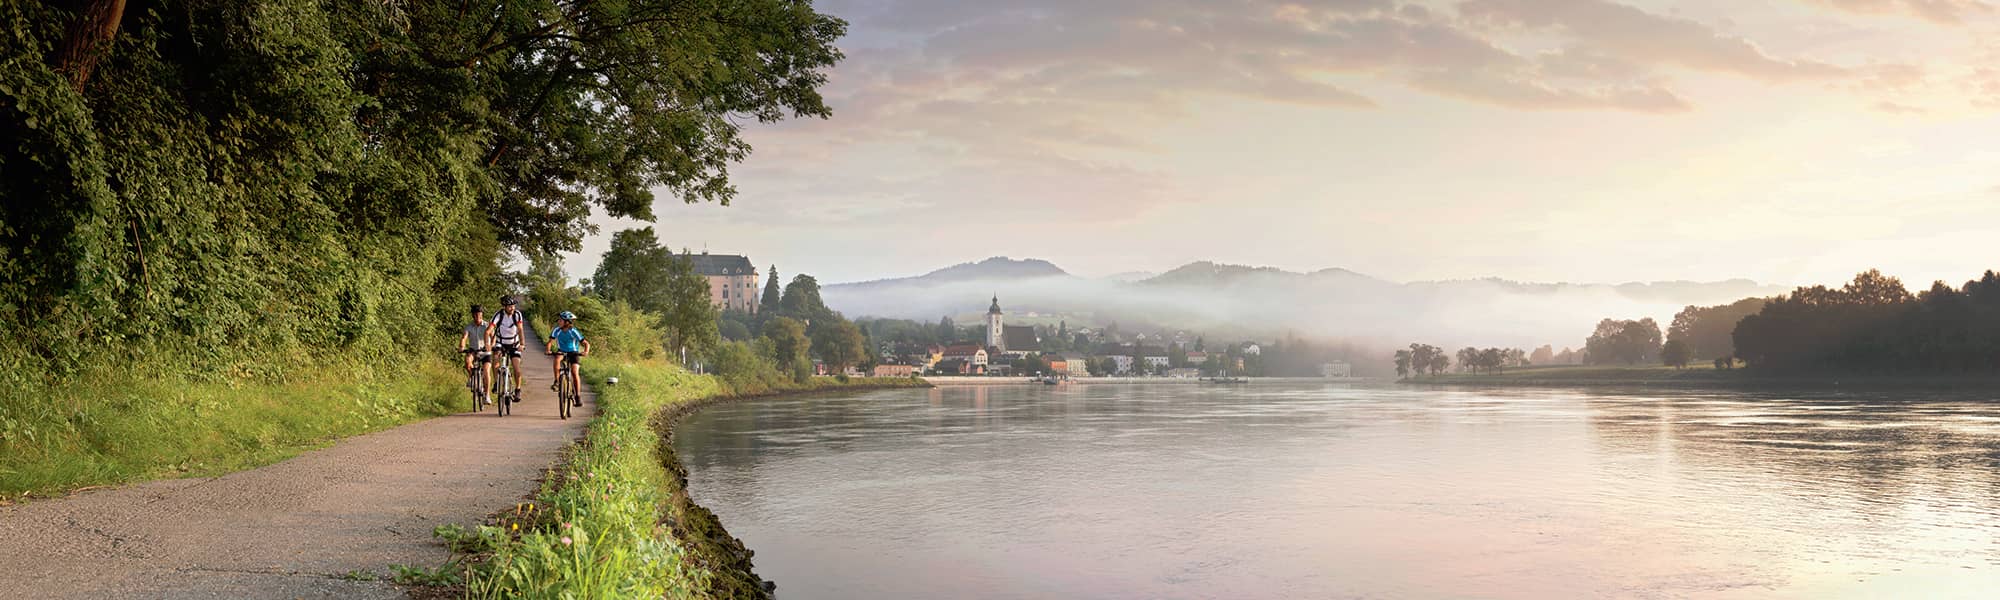 Le Danube à Vélo © Peter Burgstaller